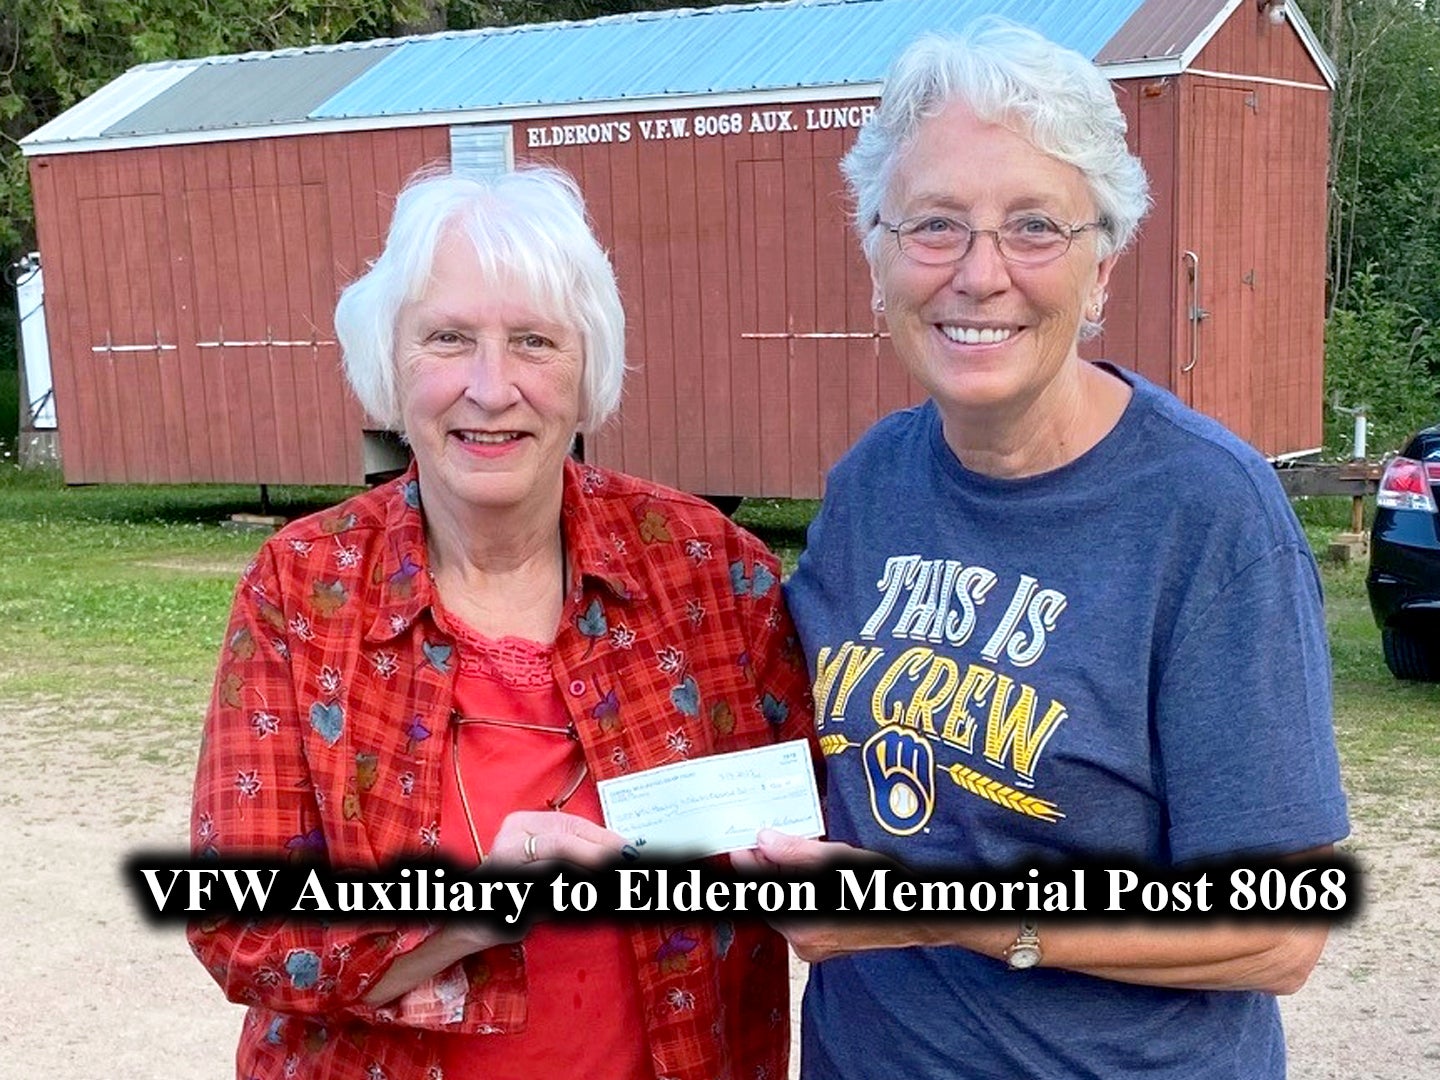 VFW Auxiliary to Elderton Memorial Post 8068